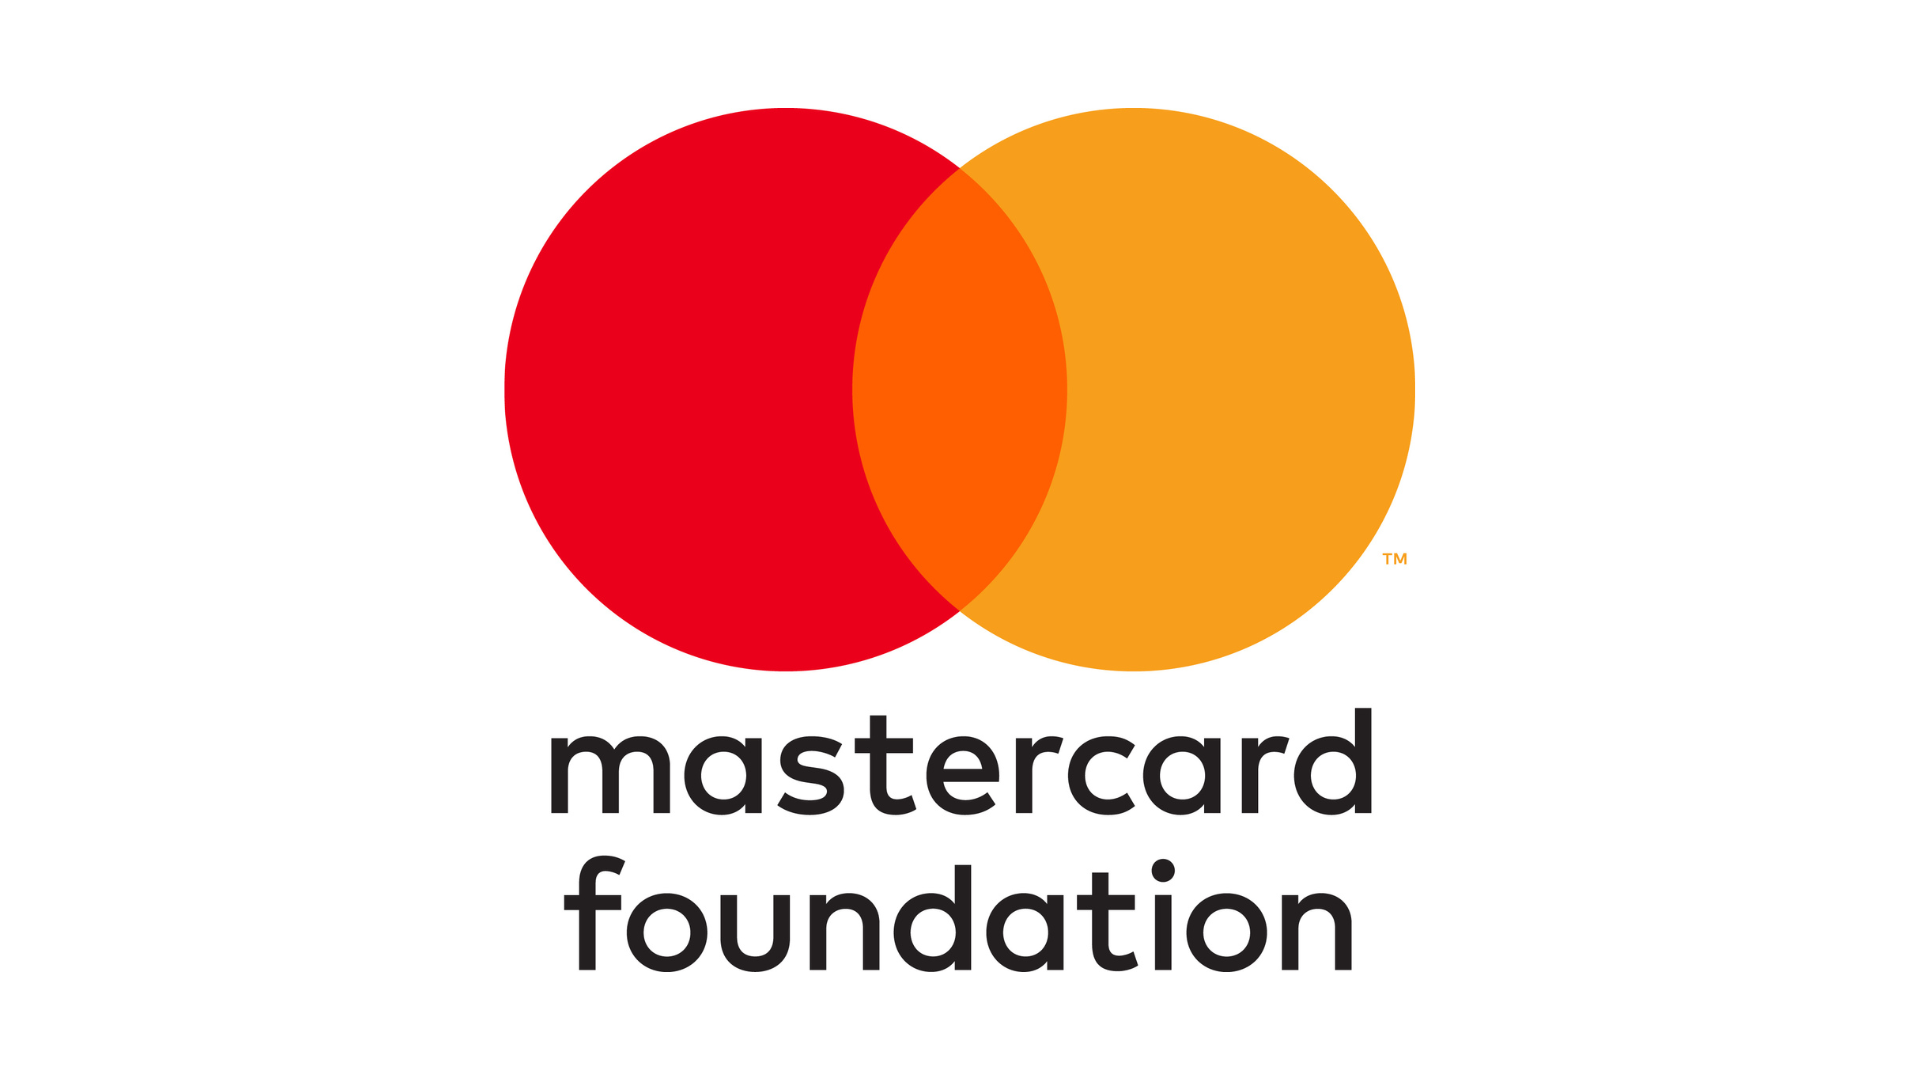 Mastercard Foundation logo